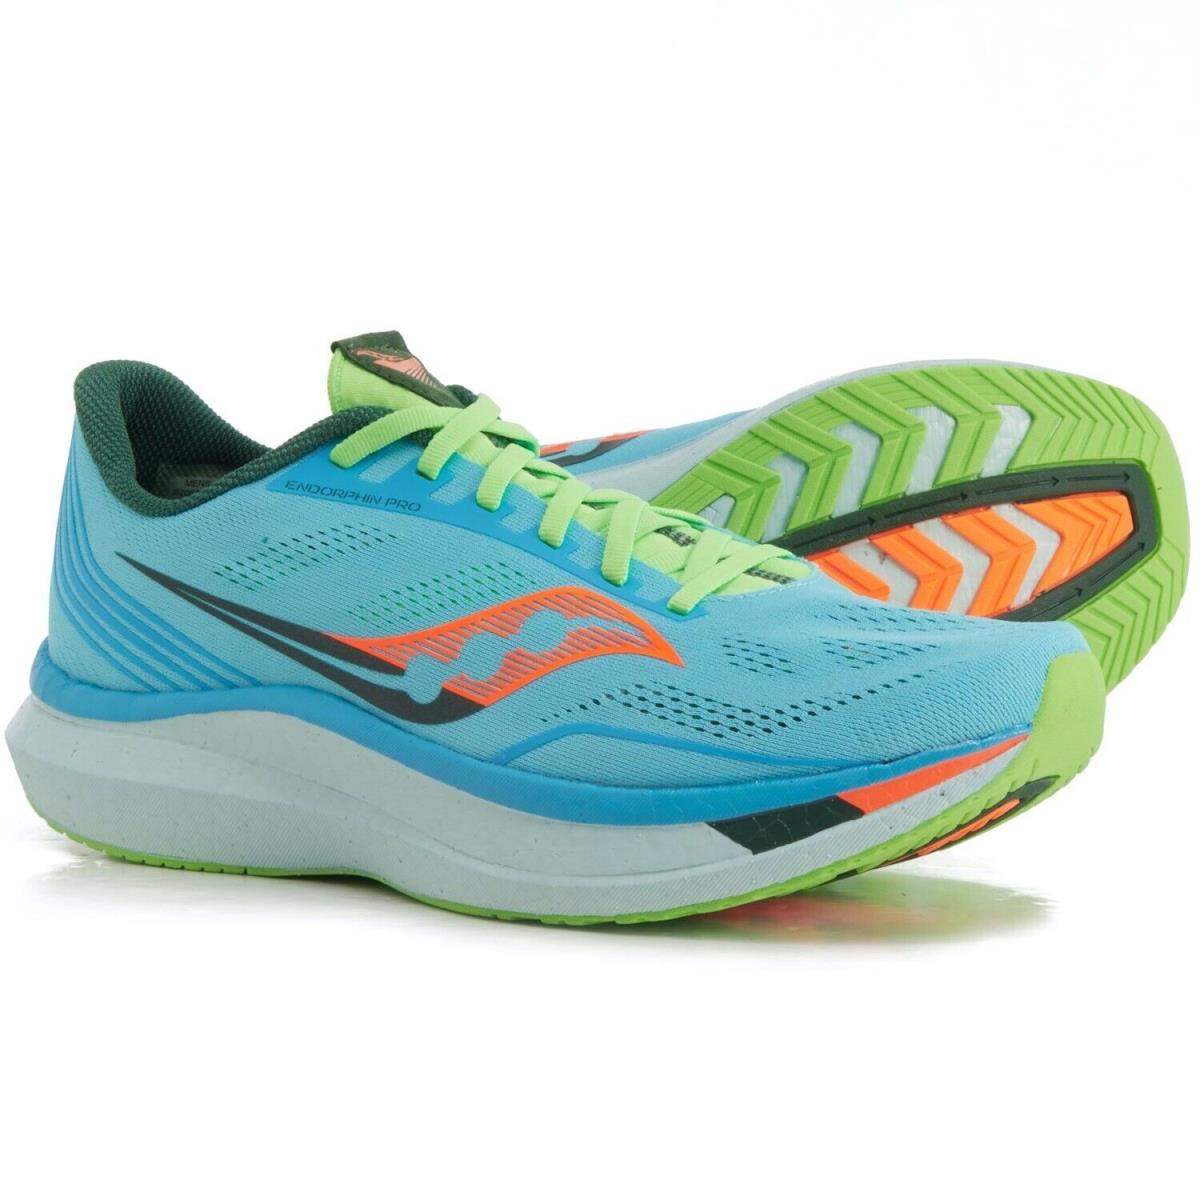 Saucony Endorphin Pro Future Blue Green Orange sz 15 S20598-26 Men Running Shoes